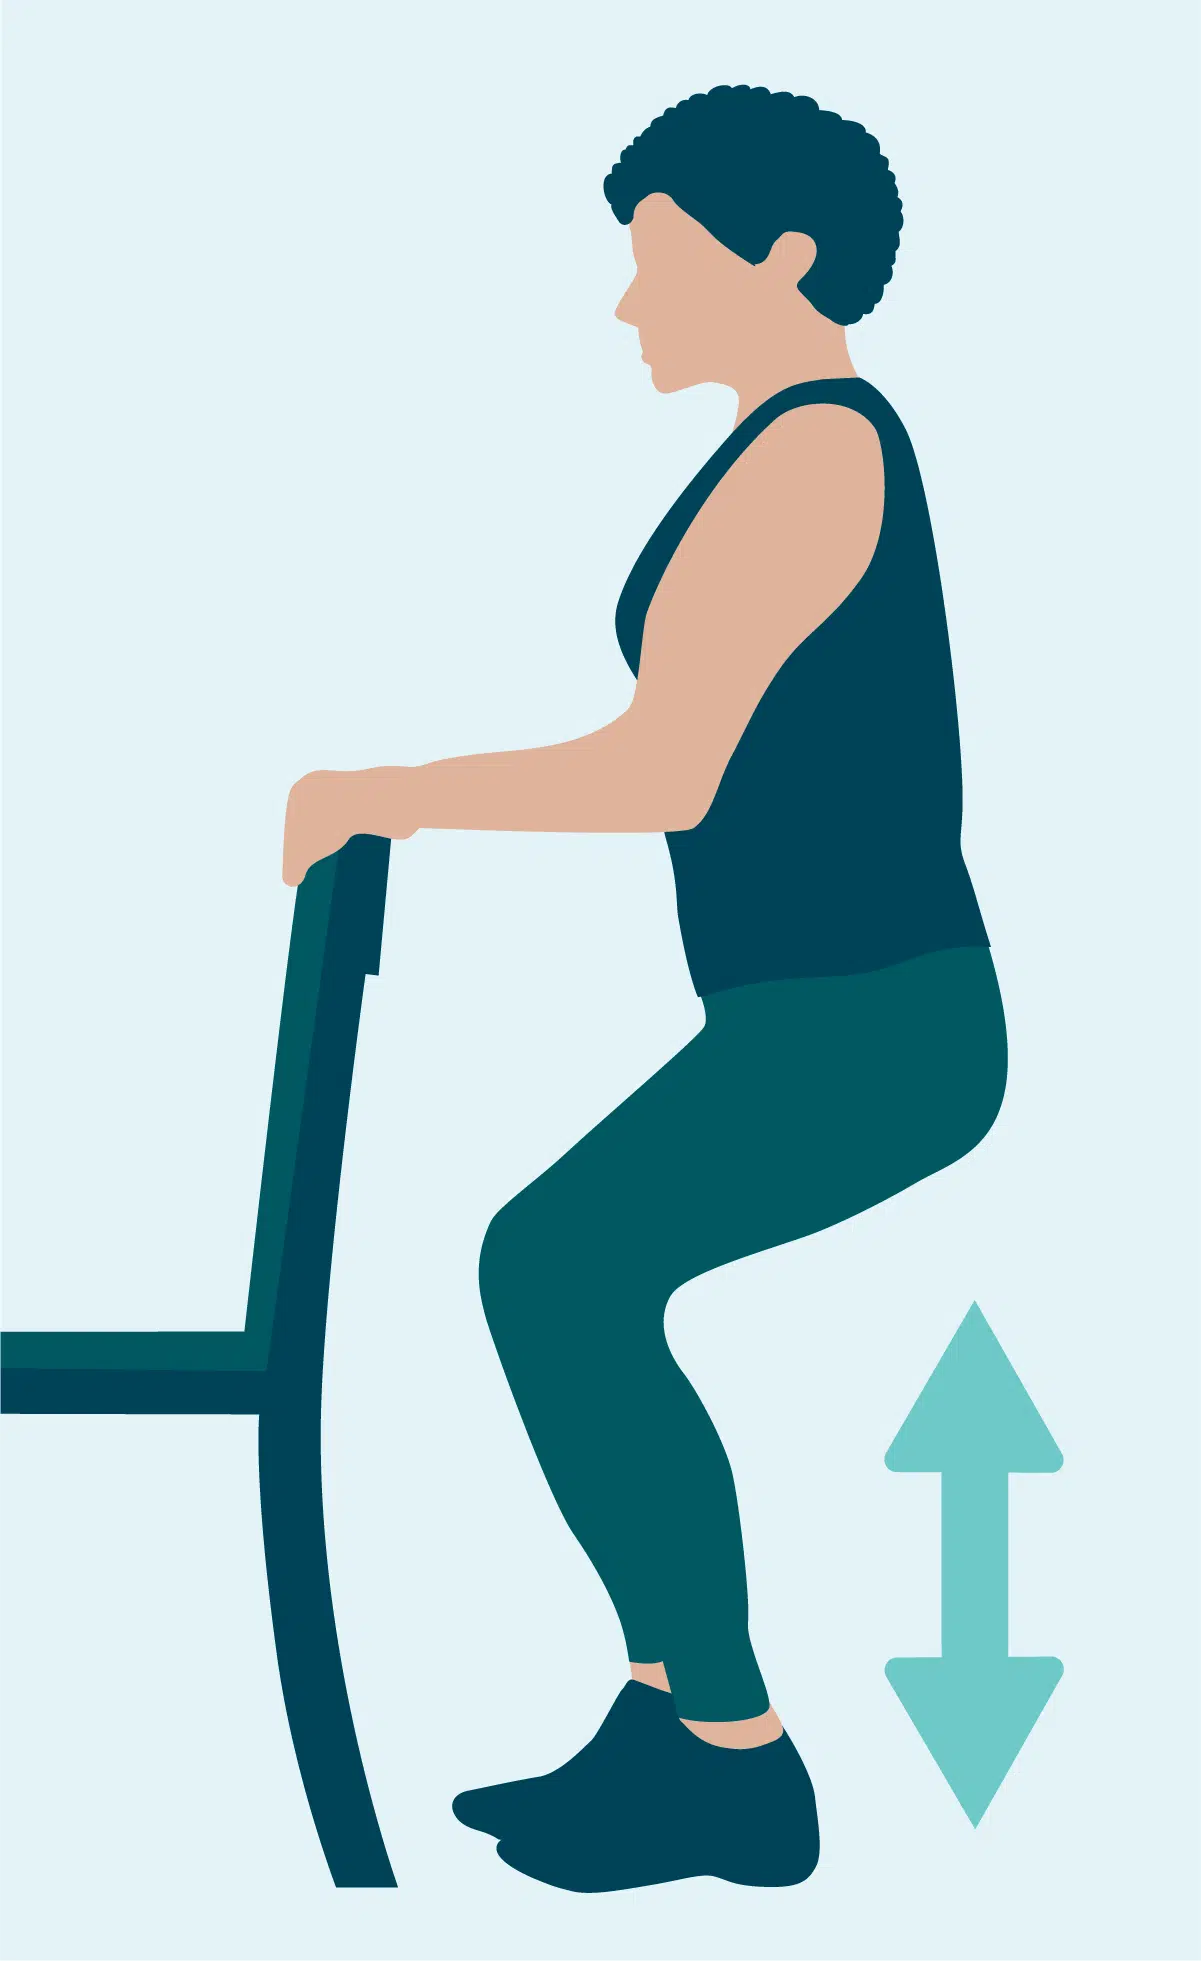 Mini-squats  Senior fitness, Daily exercise routines, Chair exercises